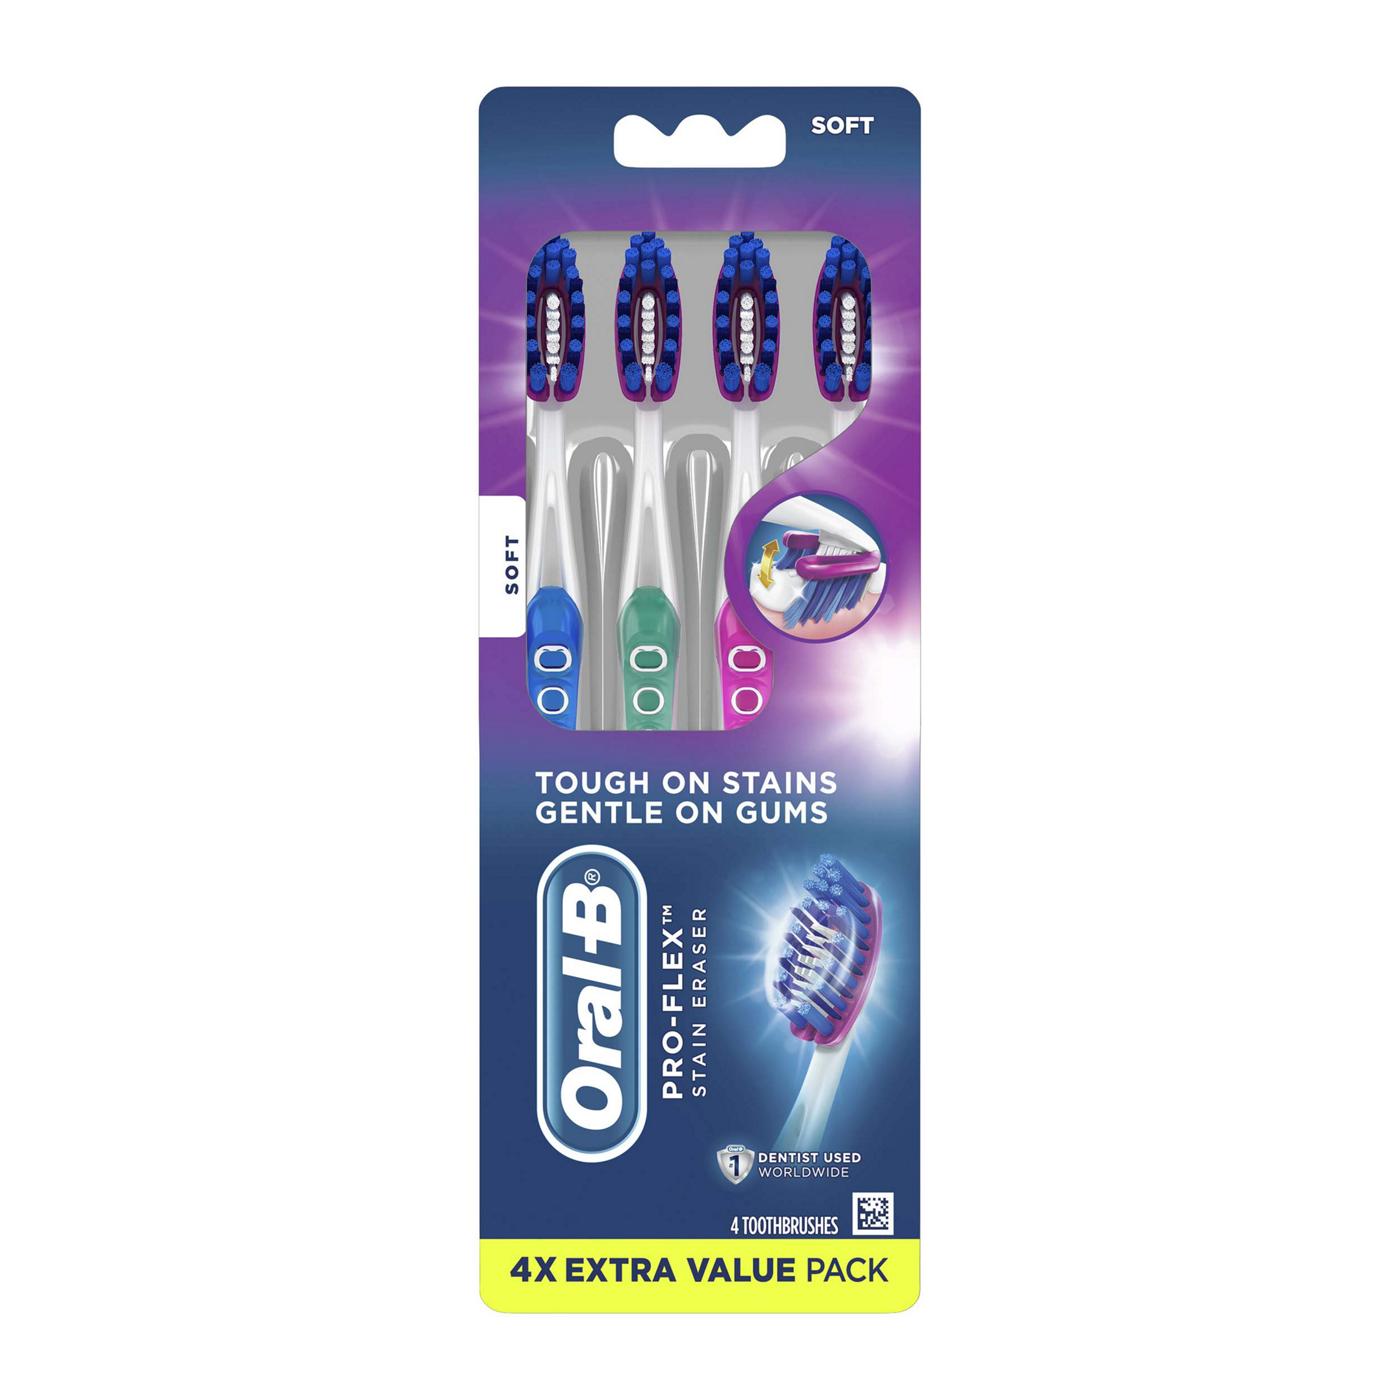 Oral-B Pro-Flex Stain Eraser Toothbrush - Soft; image 1 of 6